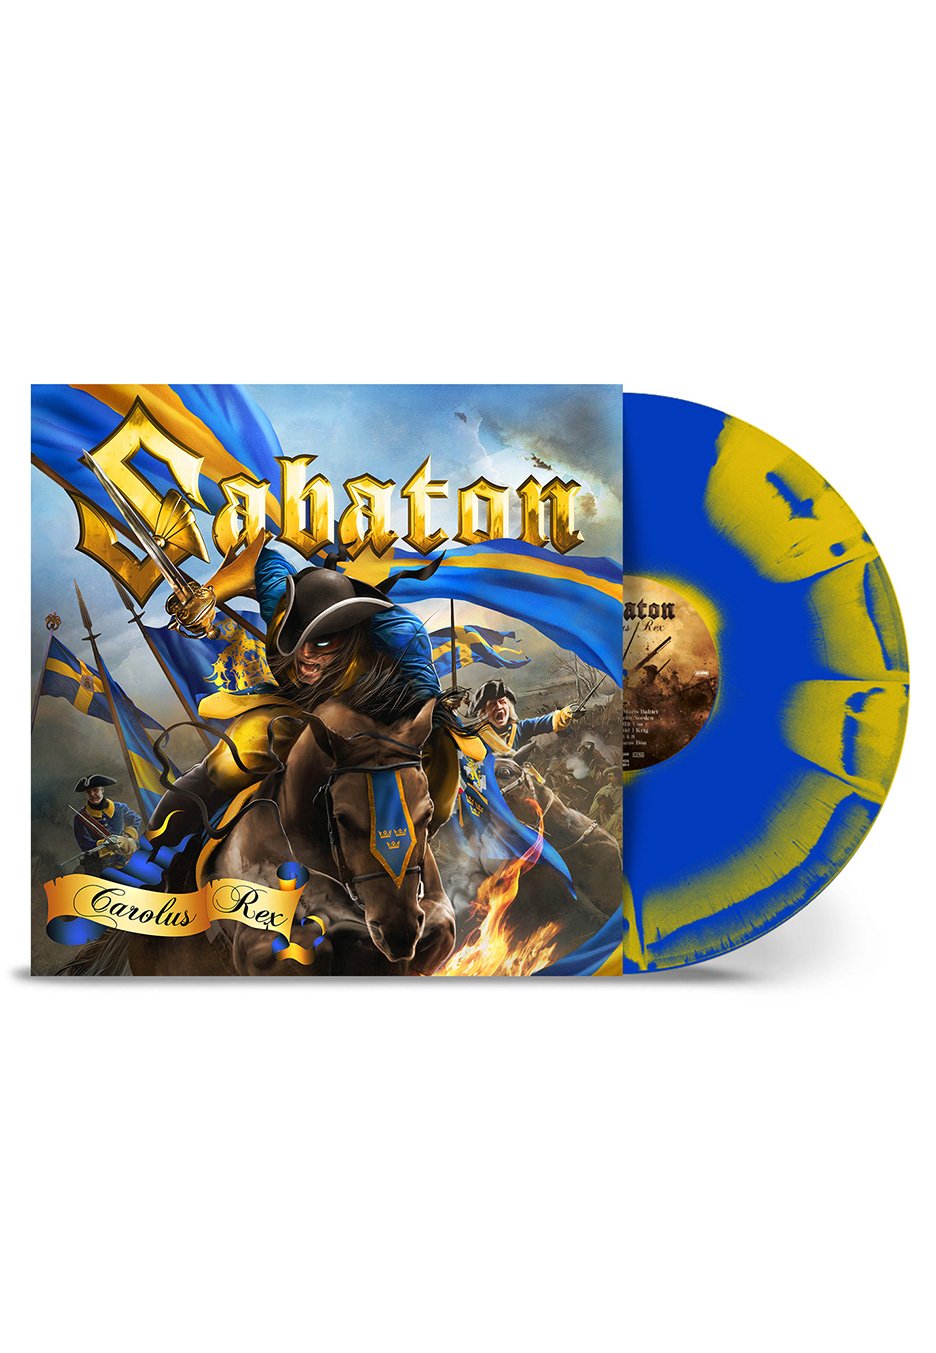 Sabaton - Carolus Rex (Swedish Edition) Blue/Yellow - Colored Vinyl